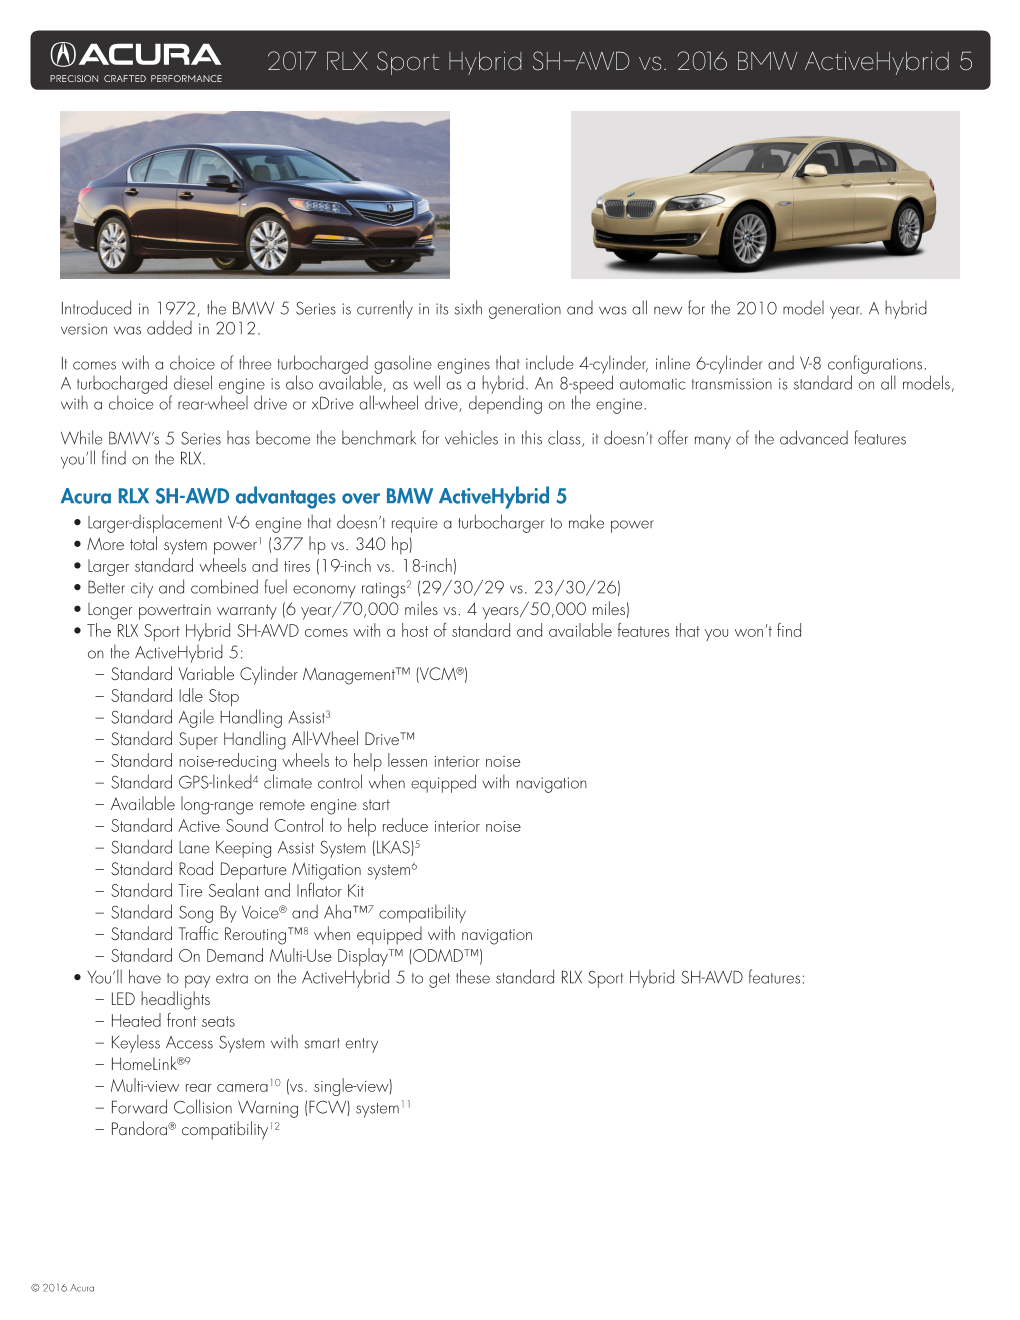 2017 RLX Sport Hybrid SH-AWD Vs. 2016 BMW Activehybrid 5